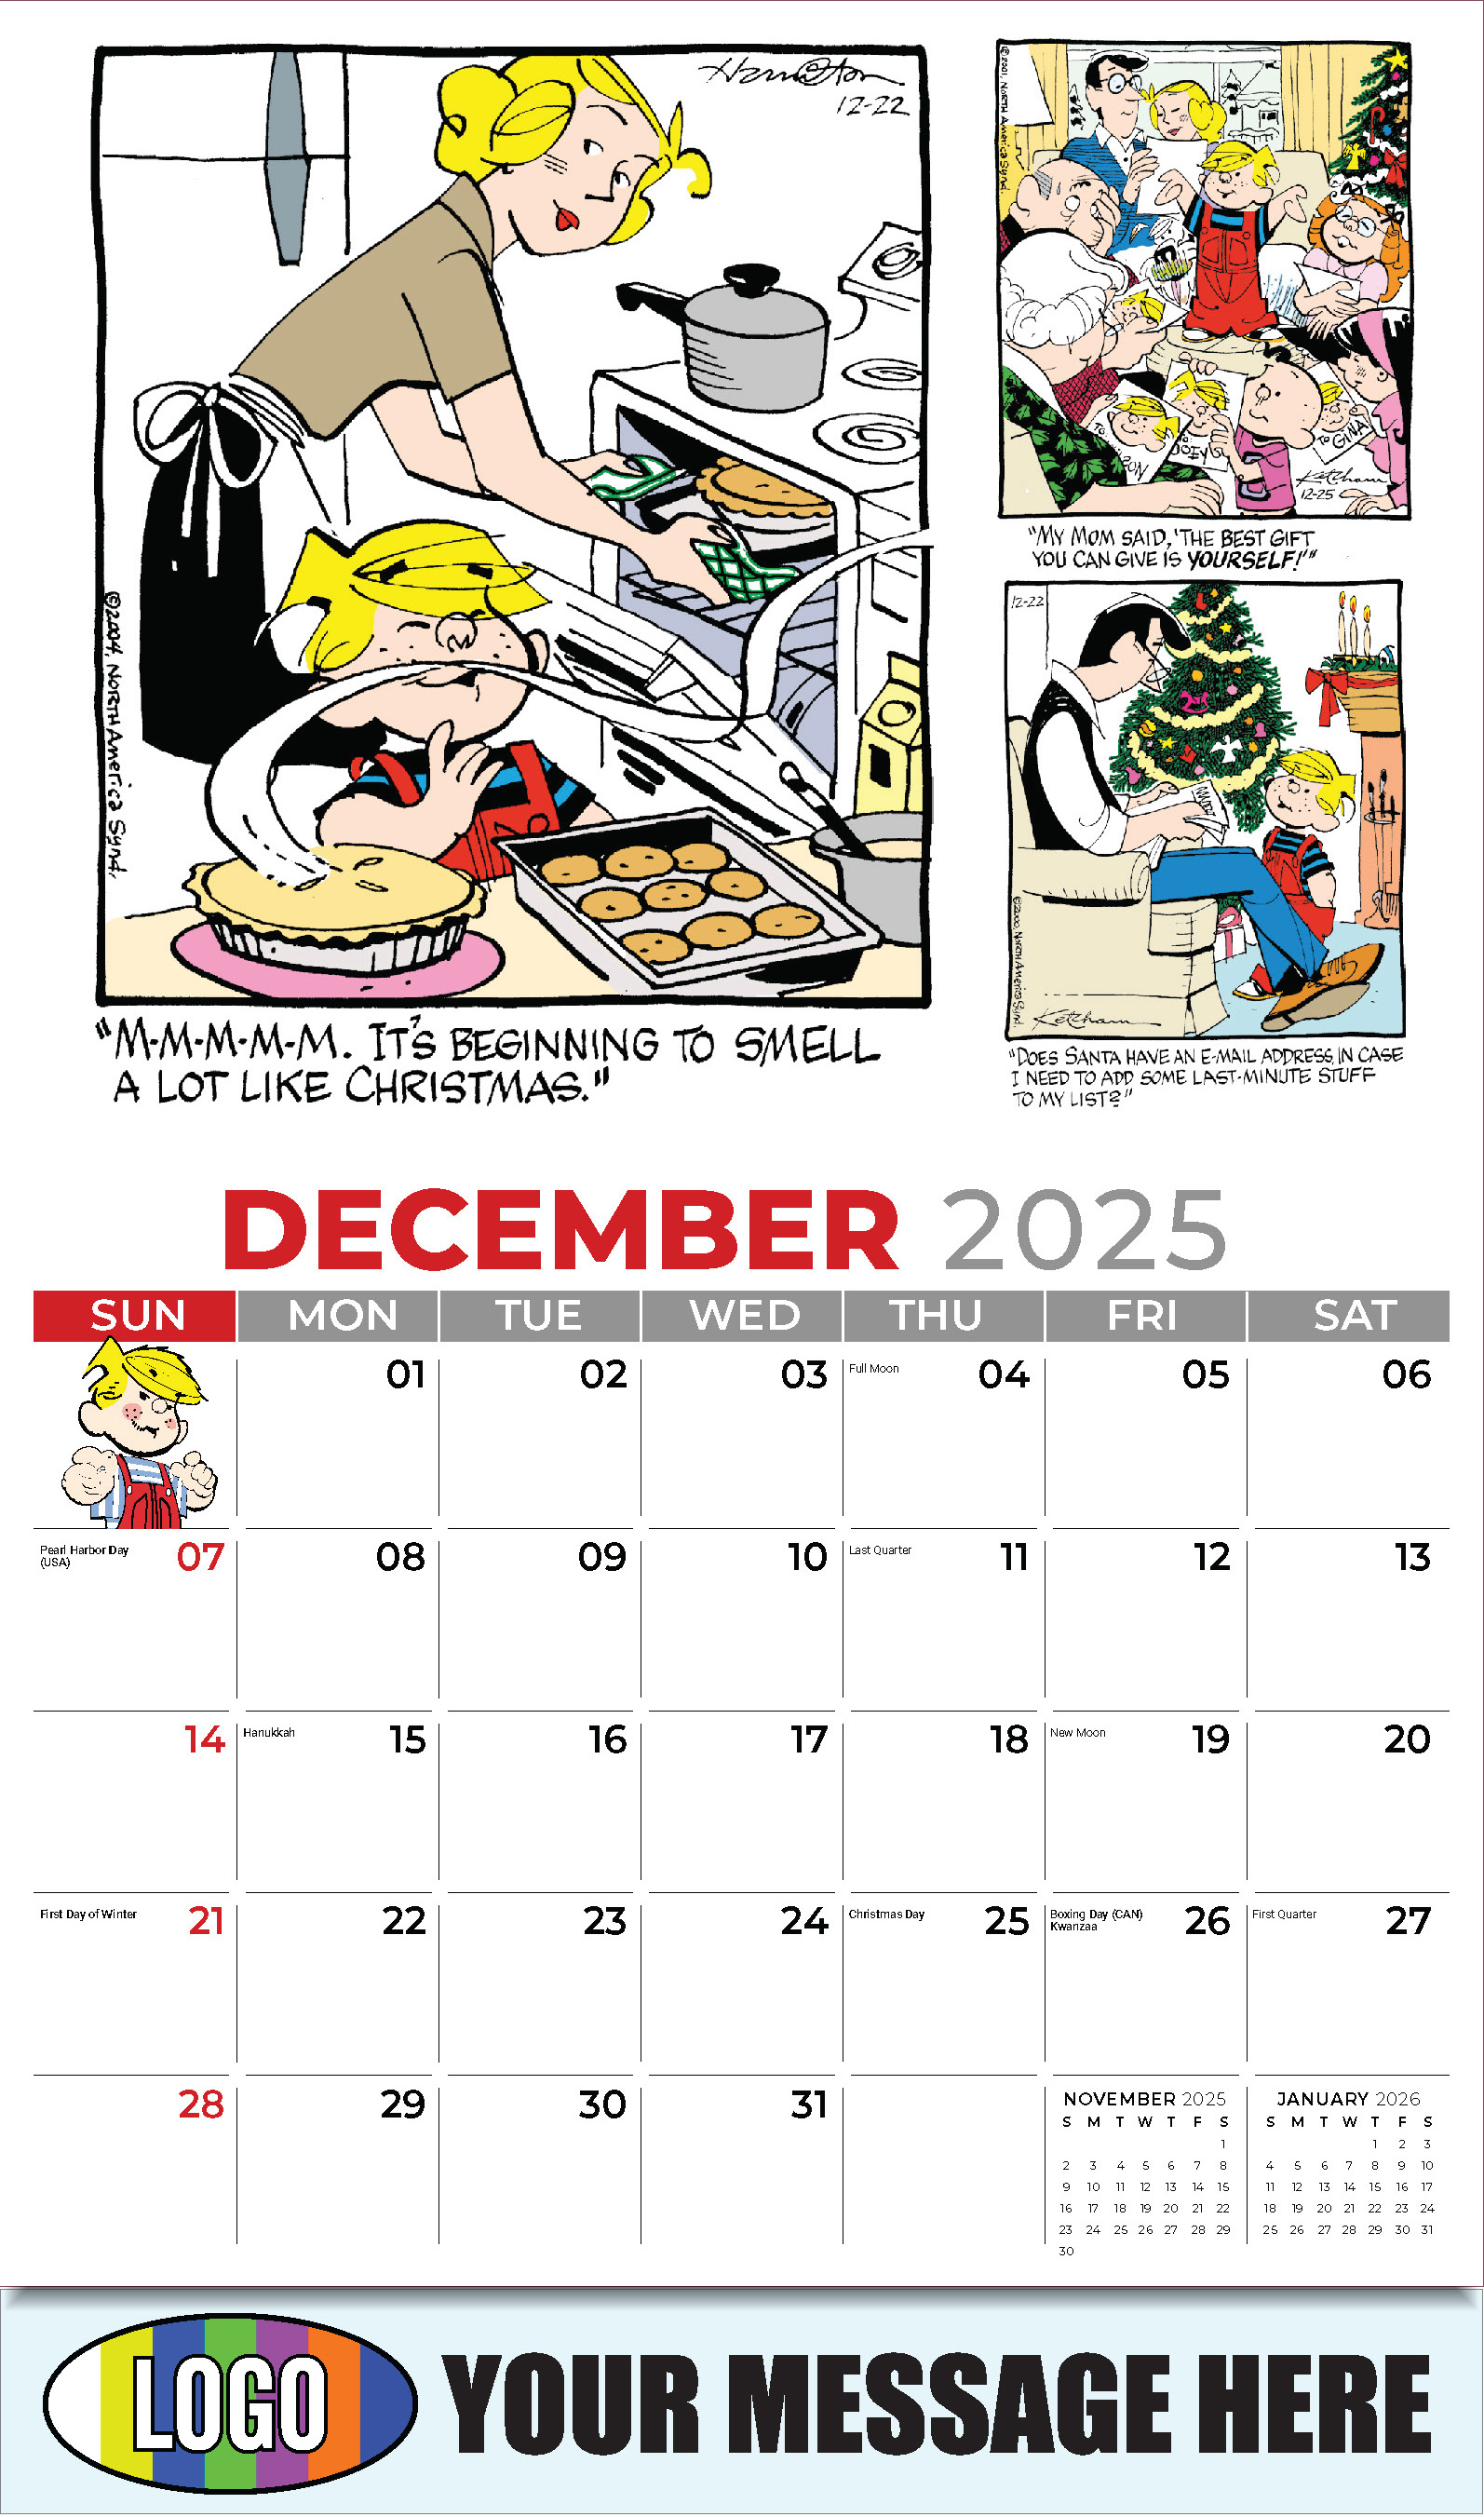 Dennis the Menace 2025 Business Promotional Wall Calendar - December